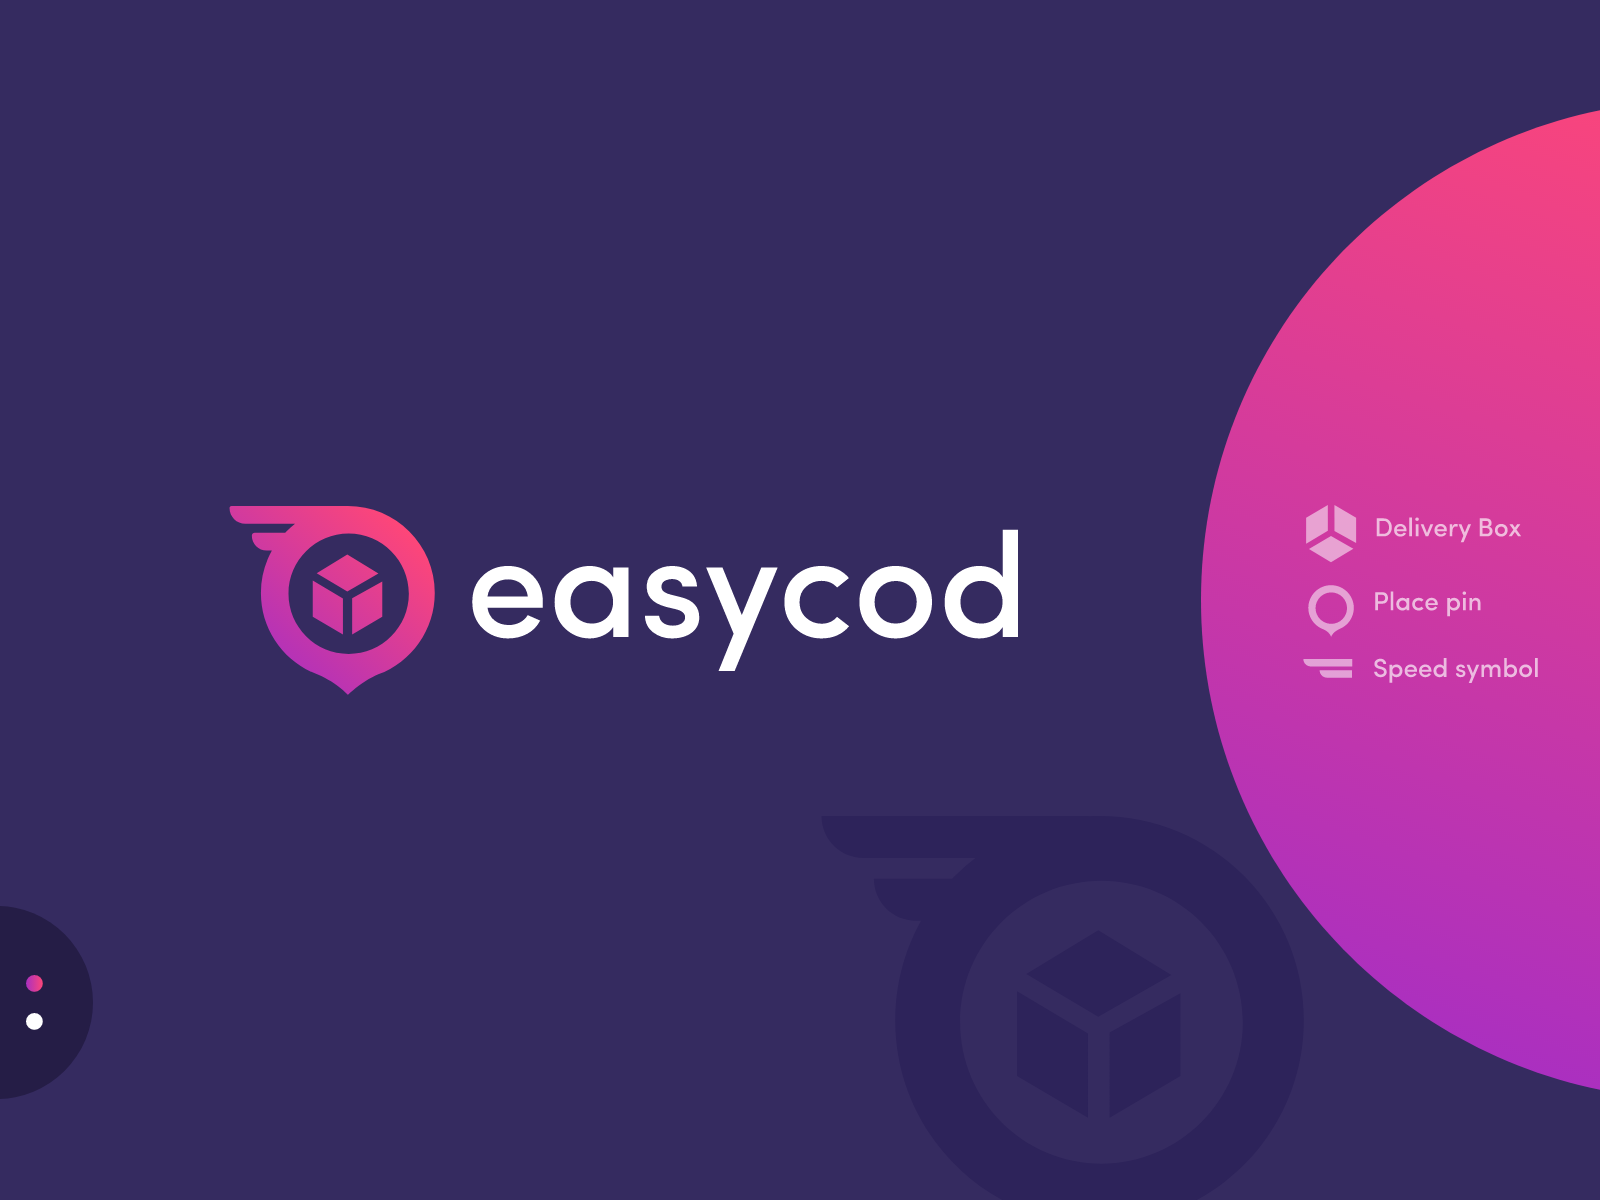 easycod - cash on delivery logo by creabik on Dribbble